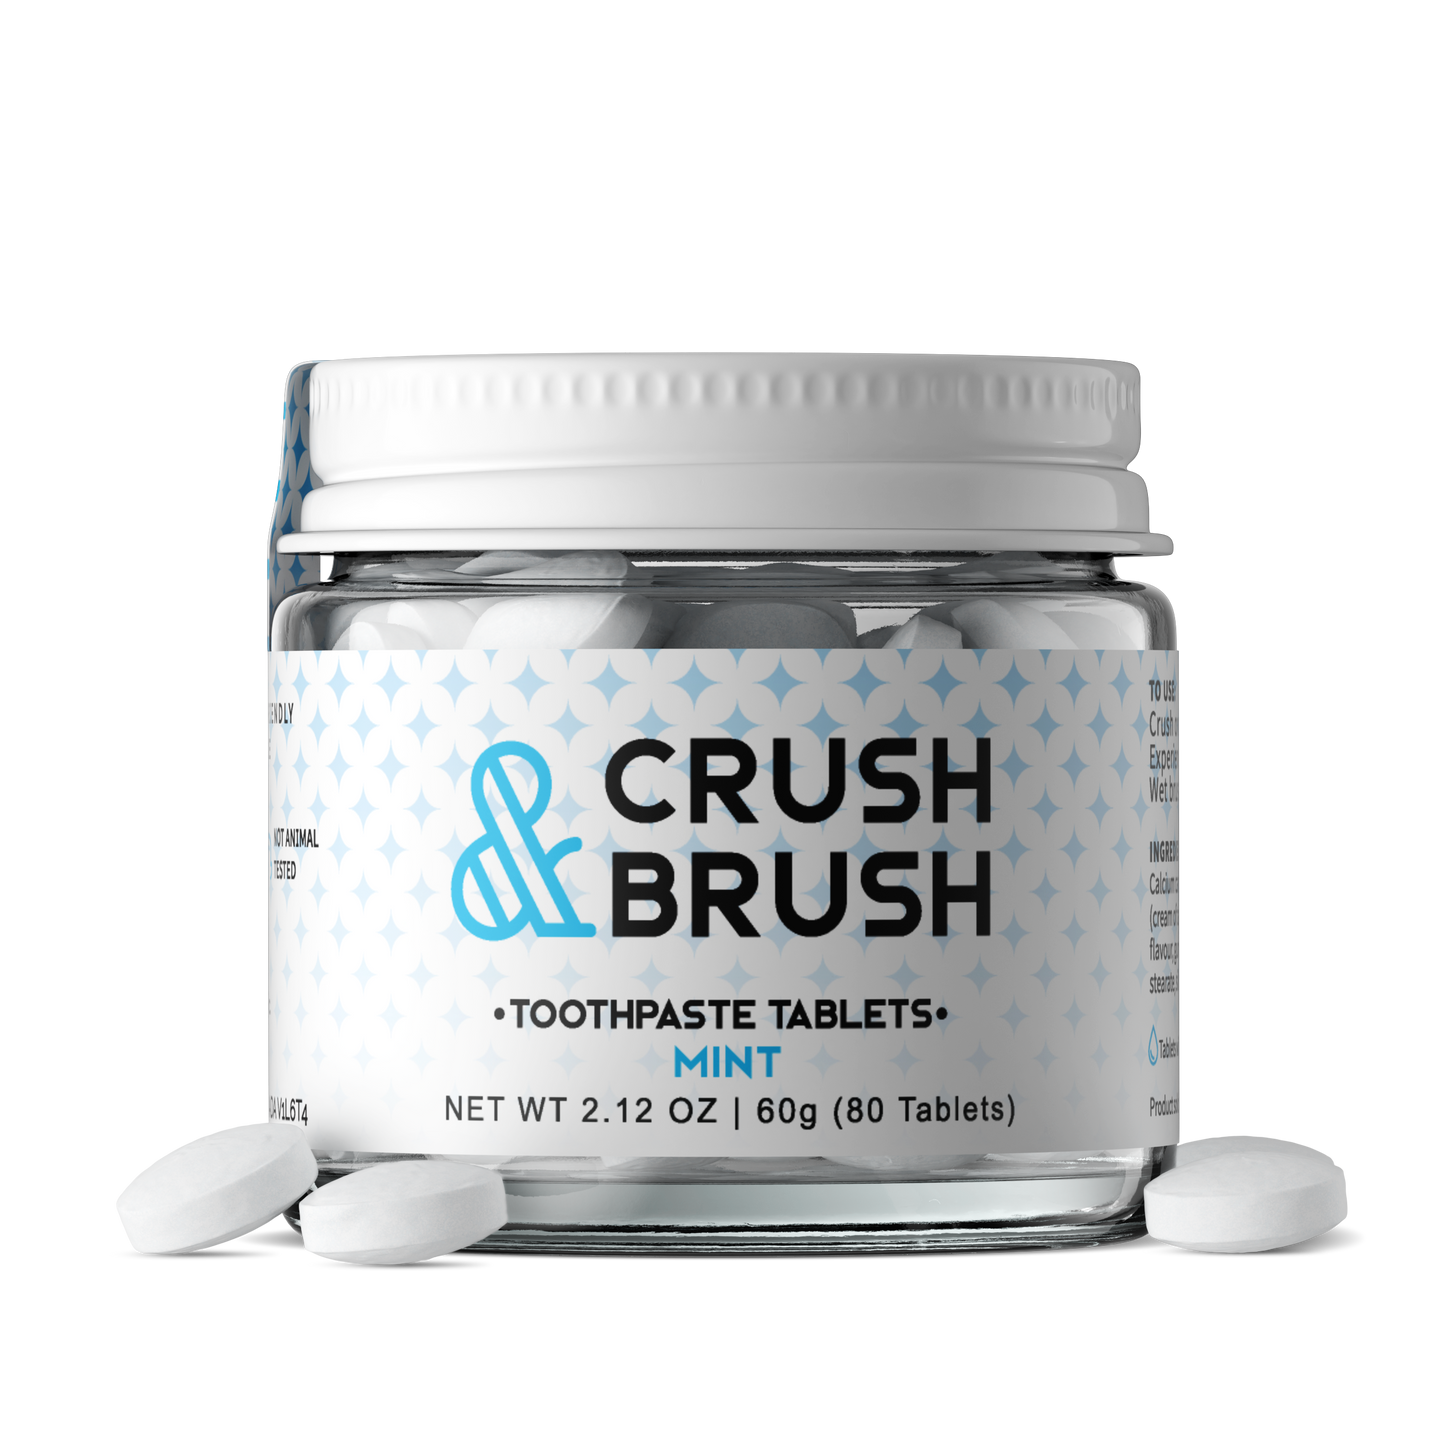 crush and brush by nelson naturals